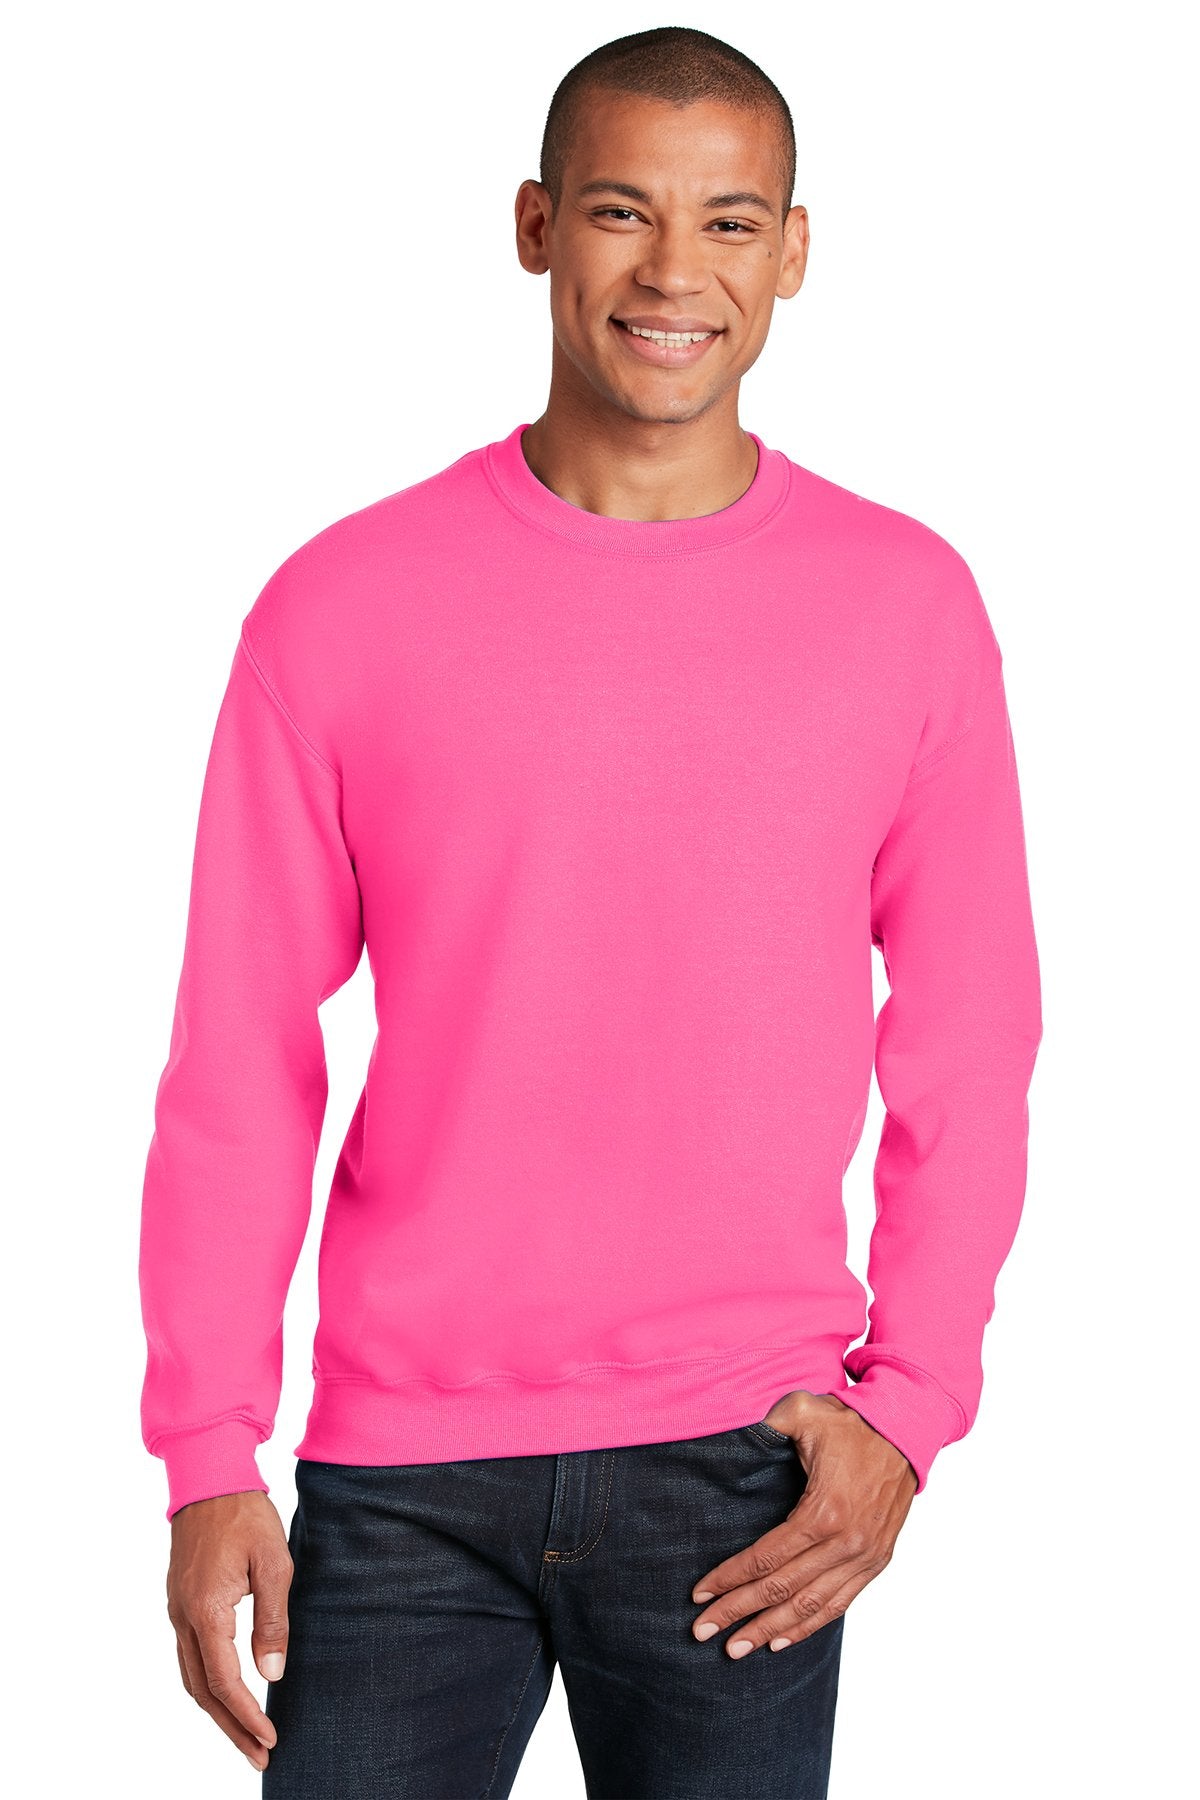 Gildan Heavy Blend Crewneck Sweatshirt in Safety Pink, with a custom logo